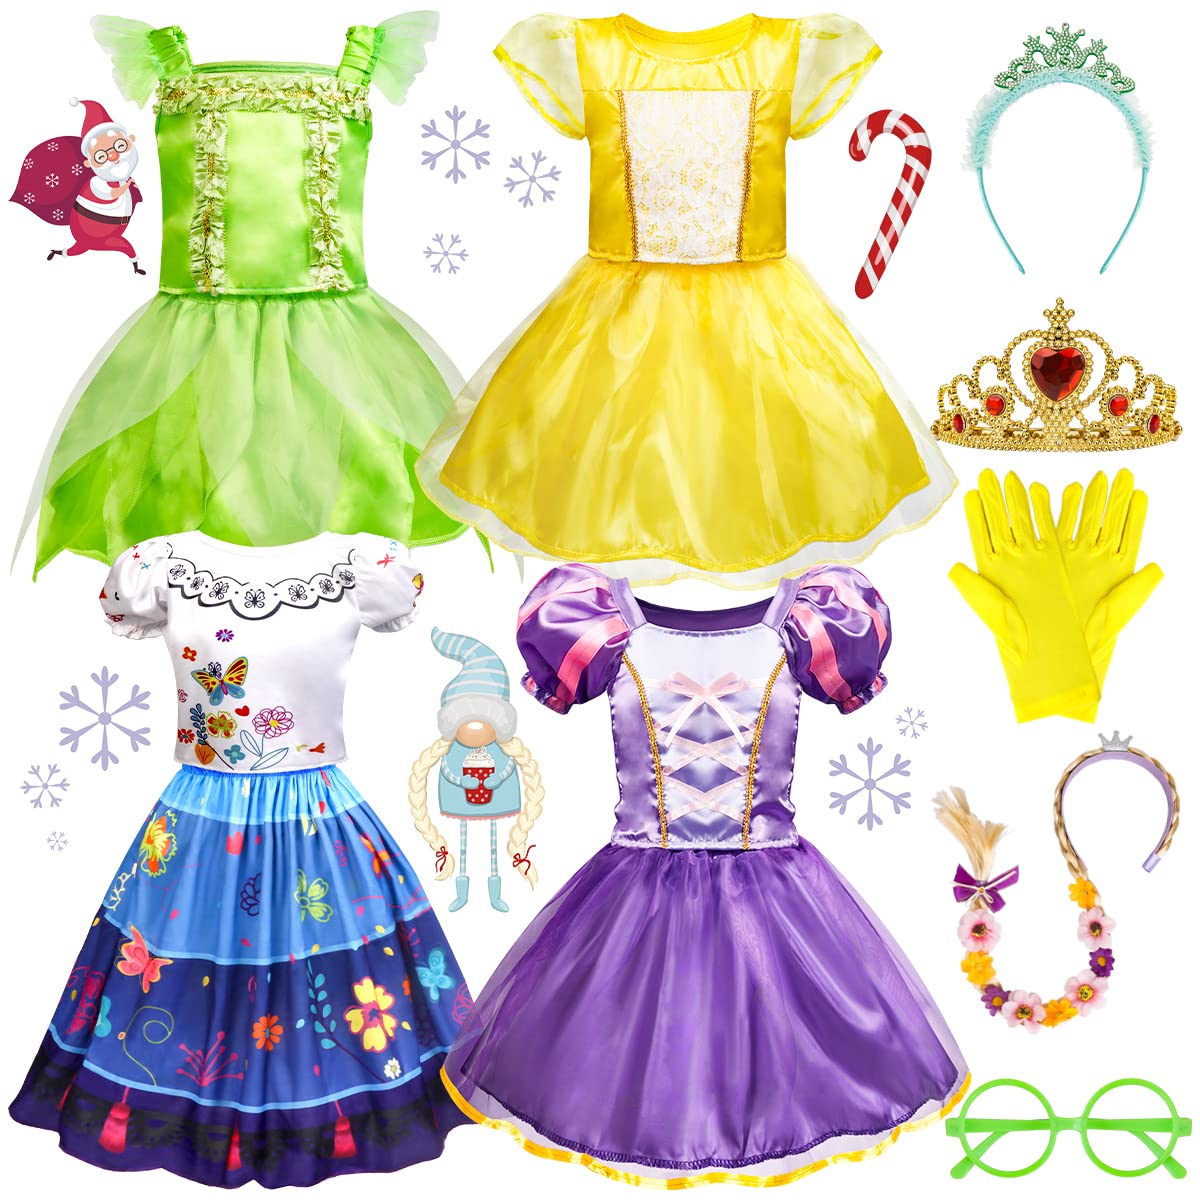 Meland Princess Dress up Trunk - Dress up Clothes for Little Girls - Princess Costume Toy Gift Girls 3-8 Pretend Play